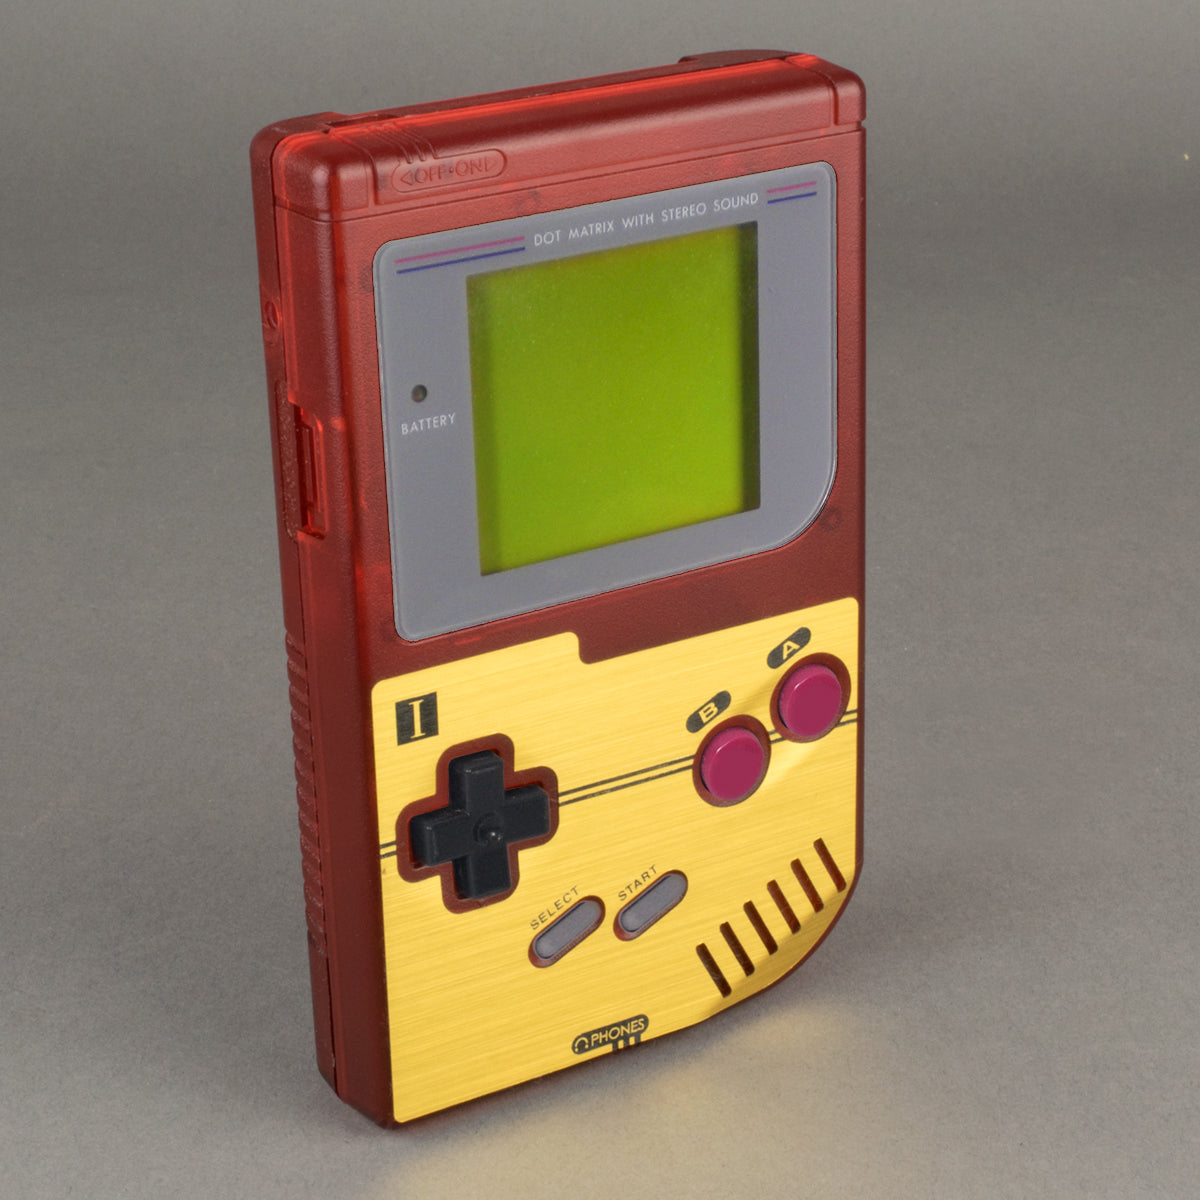 Original DMG Game Boy Famicom-Style Gold Veneer – Rose Colored Gaming